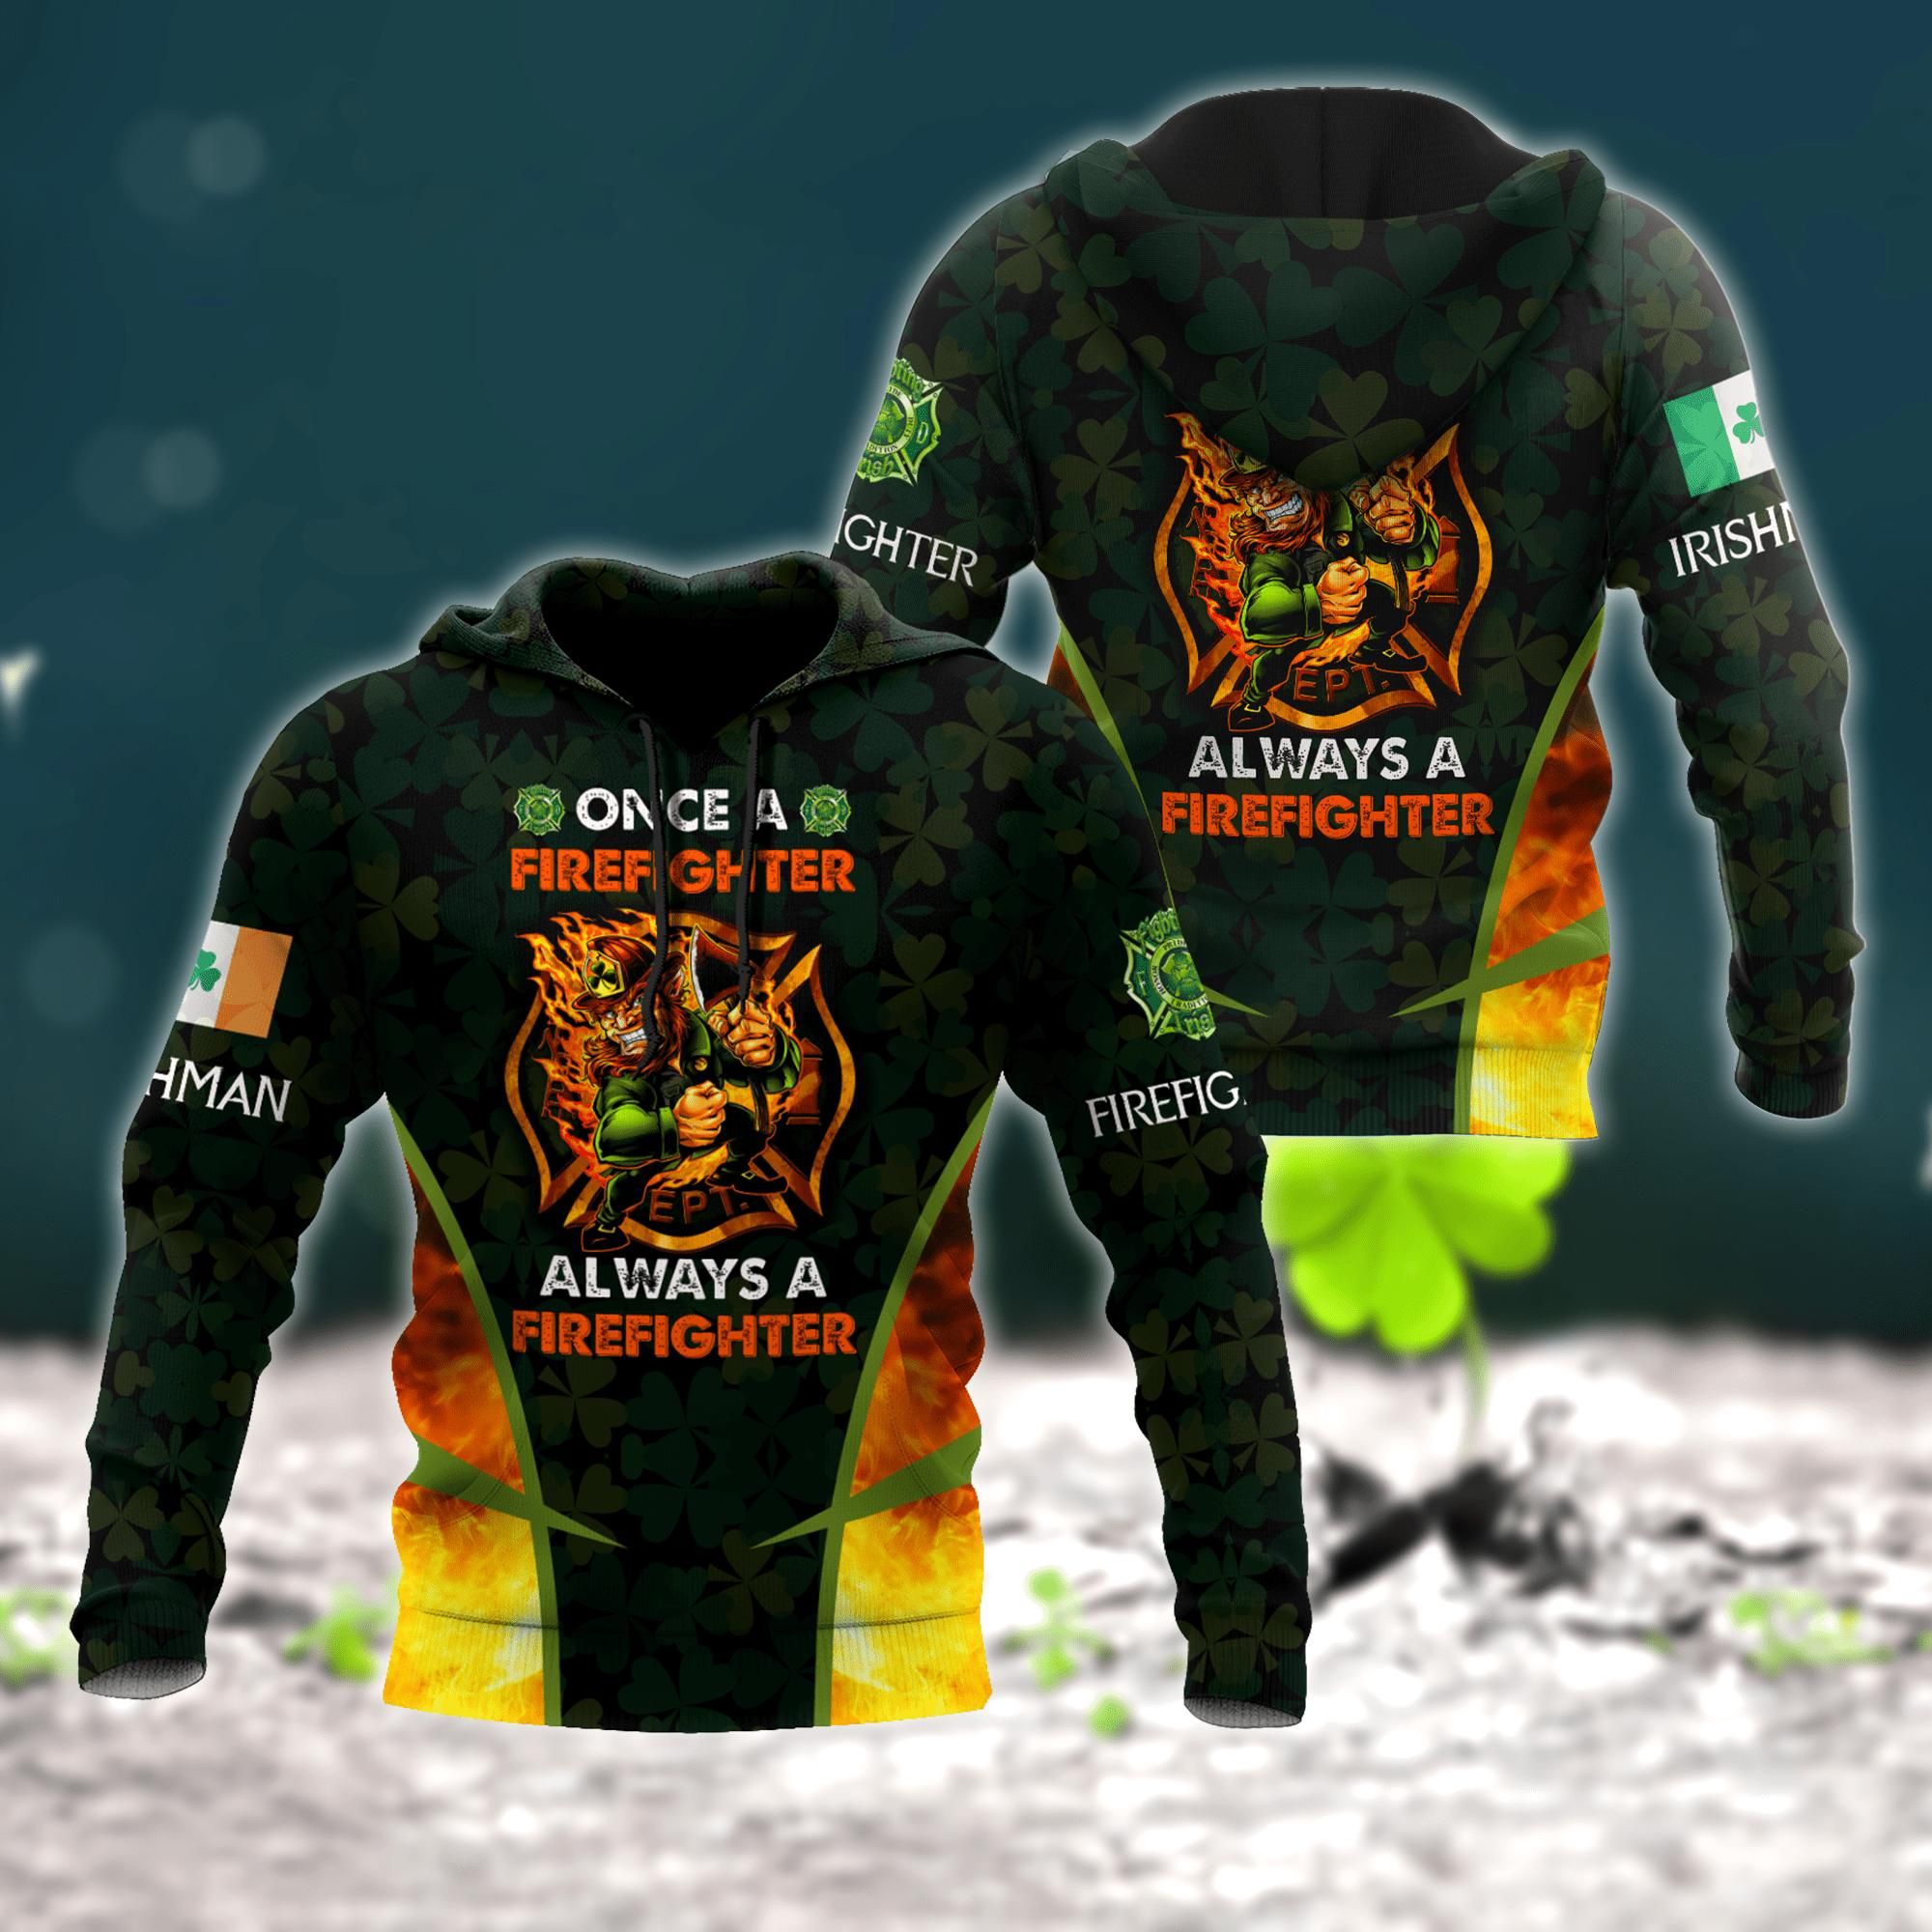 3D All Over Printed Irish- Firefighter  Unisex Shirts Xt